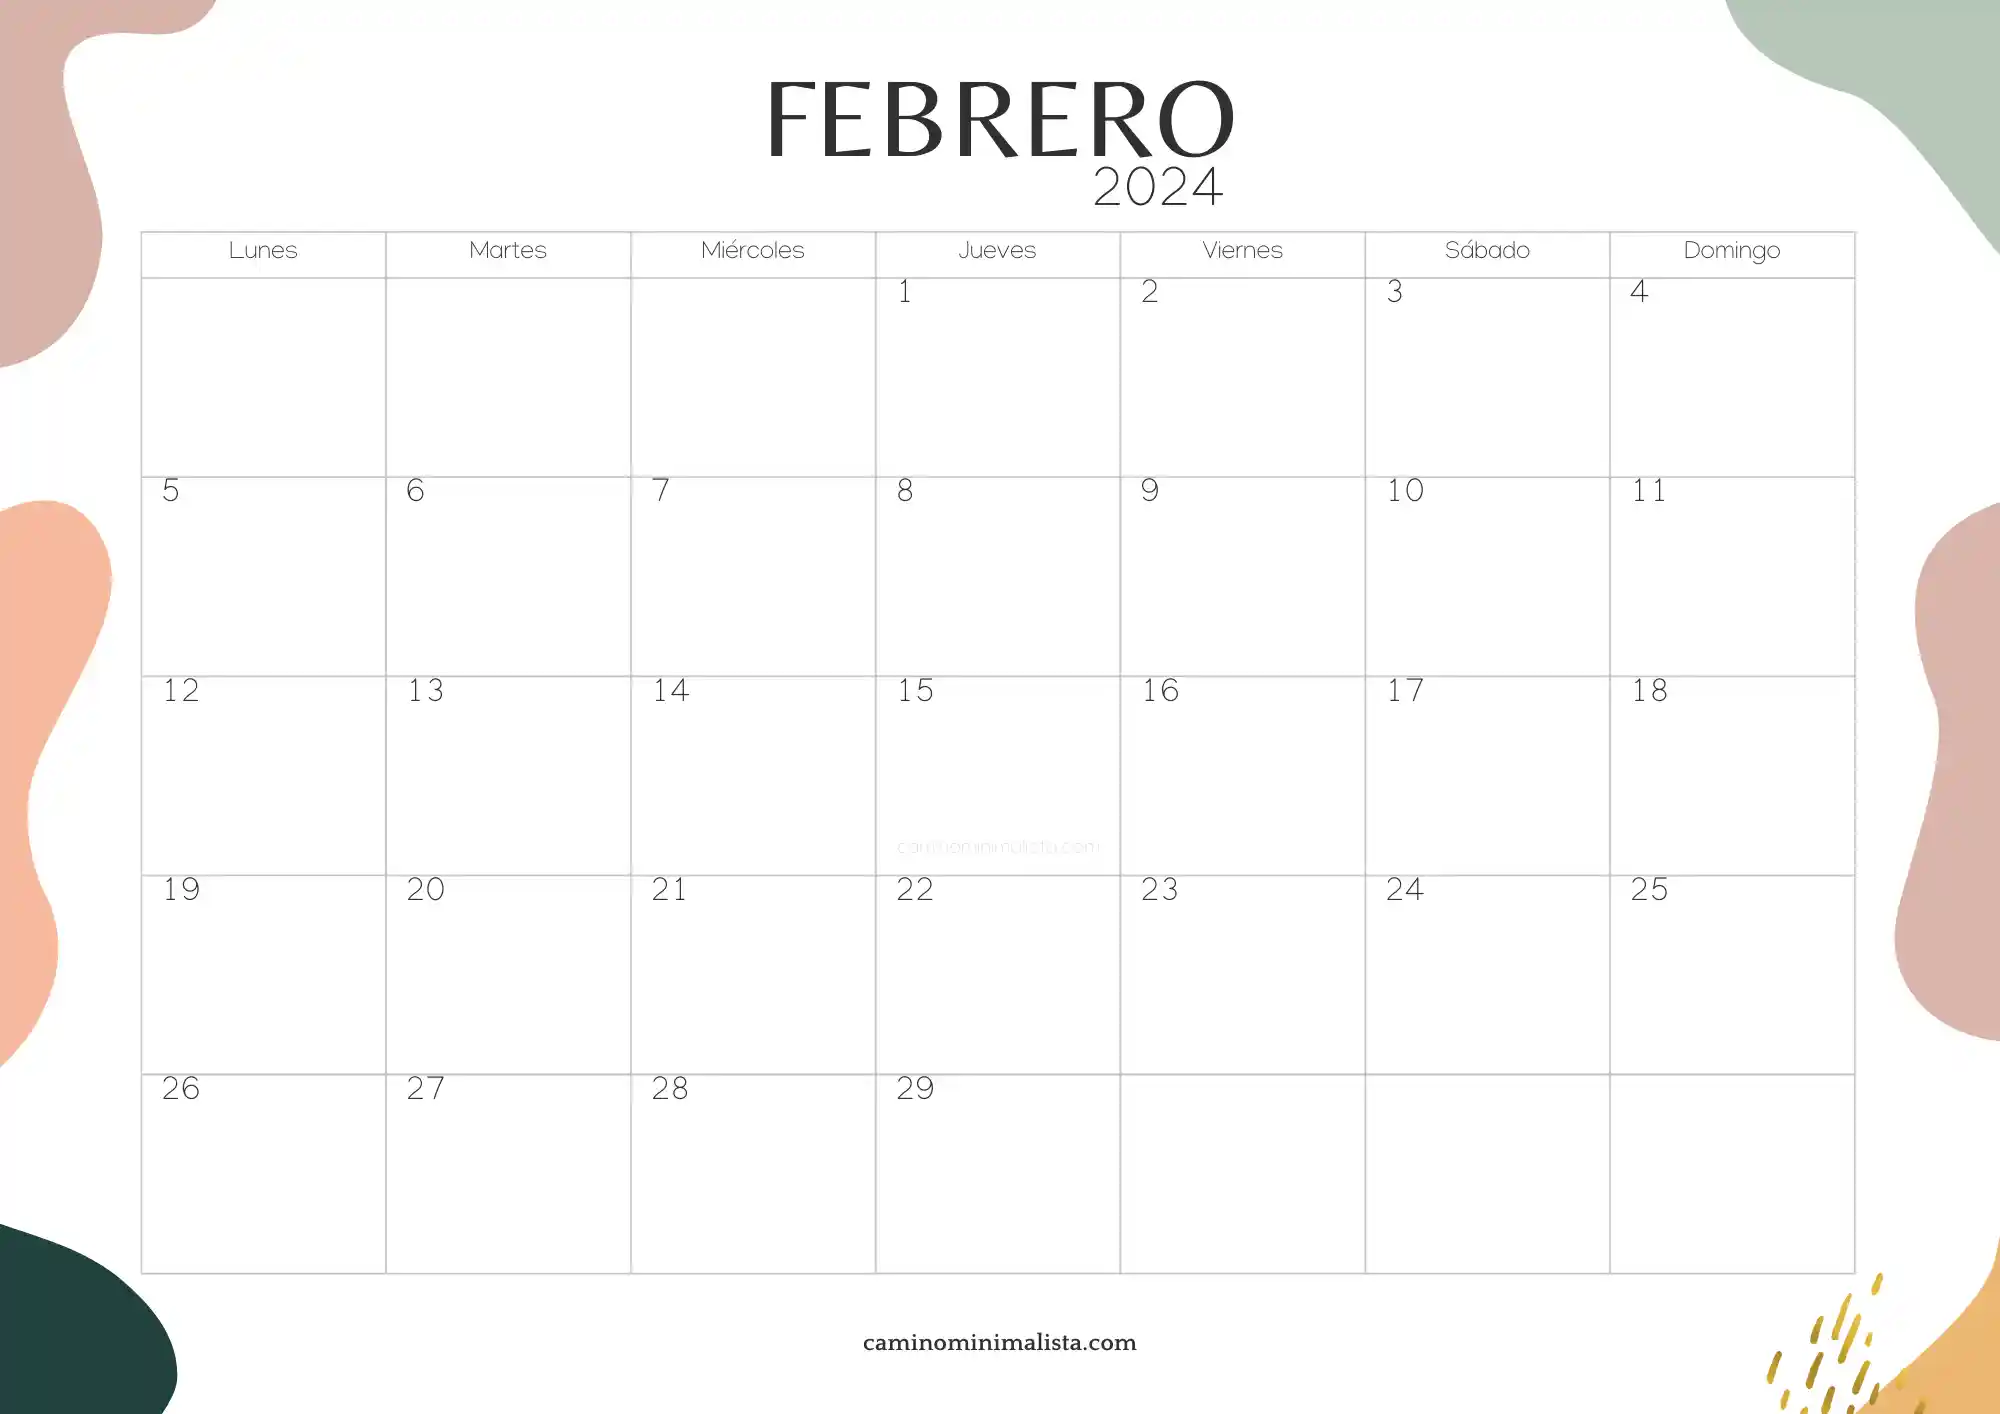 Calendario Febrero 2024 aesthetic